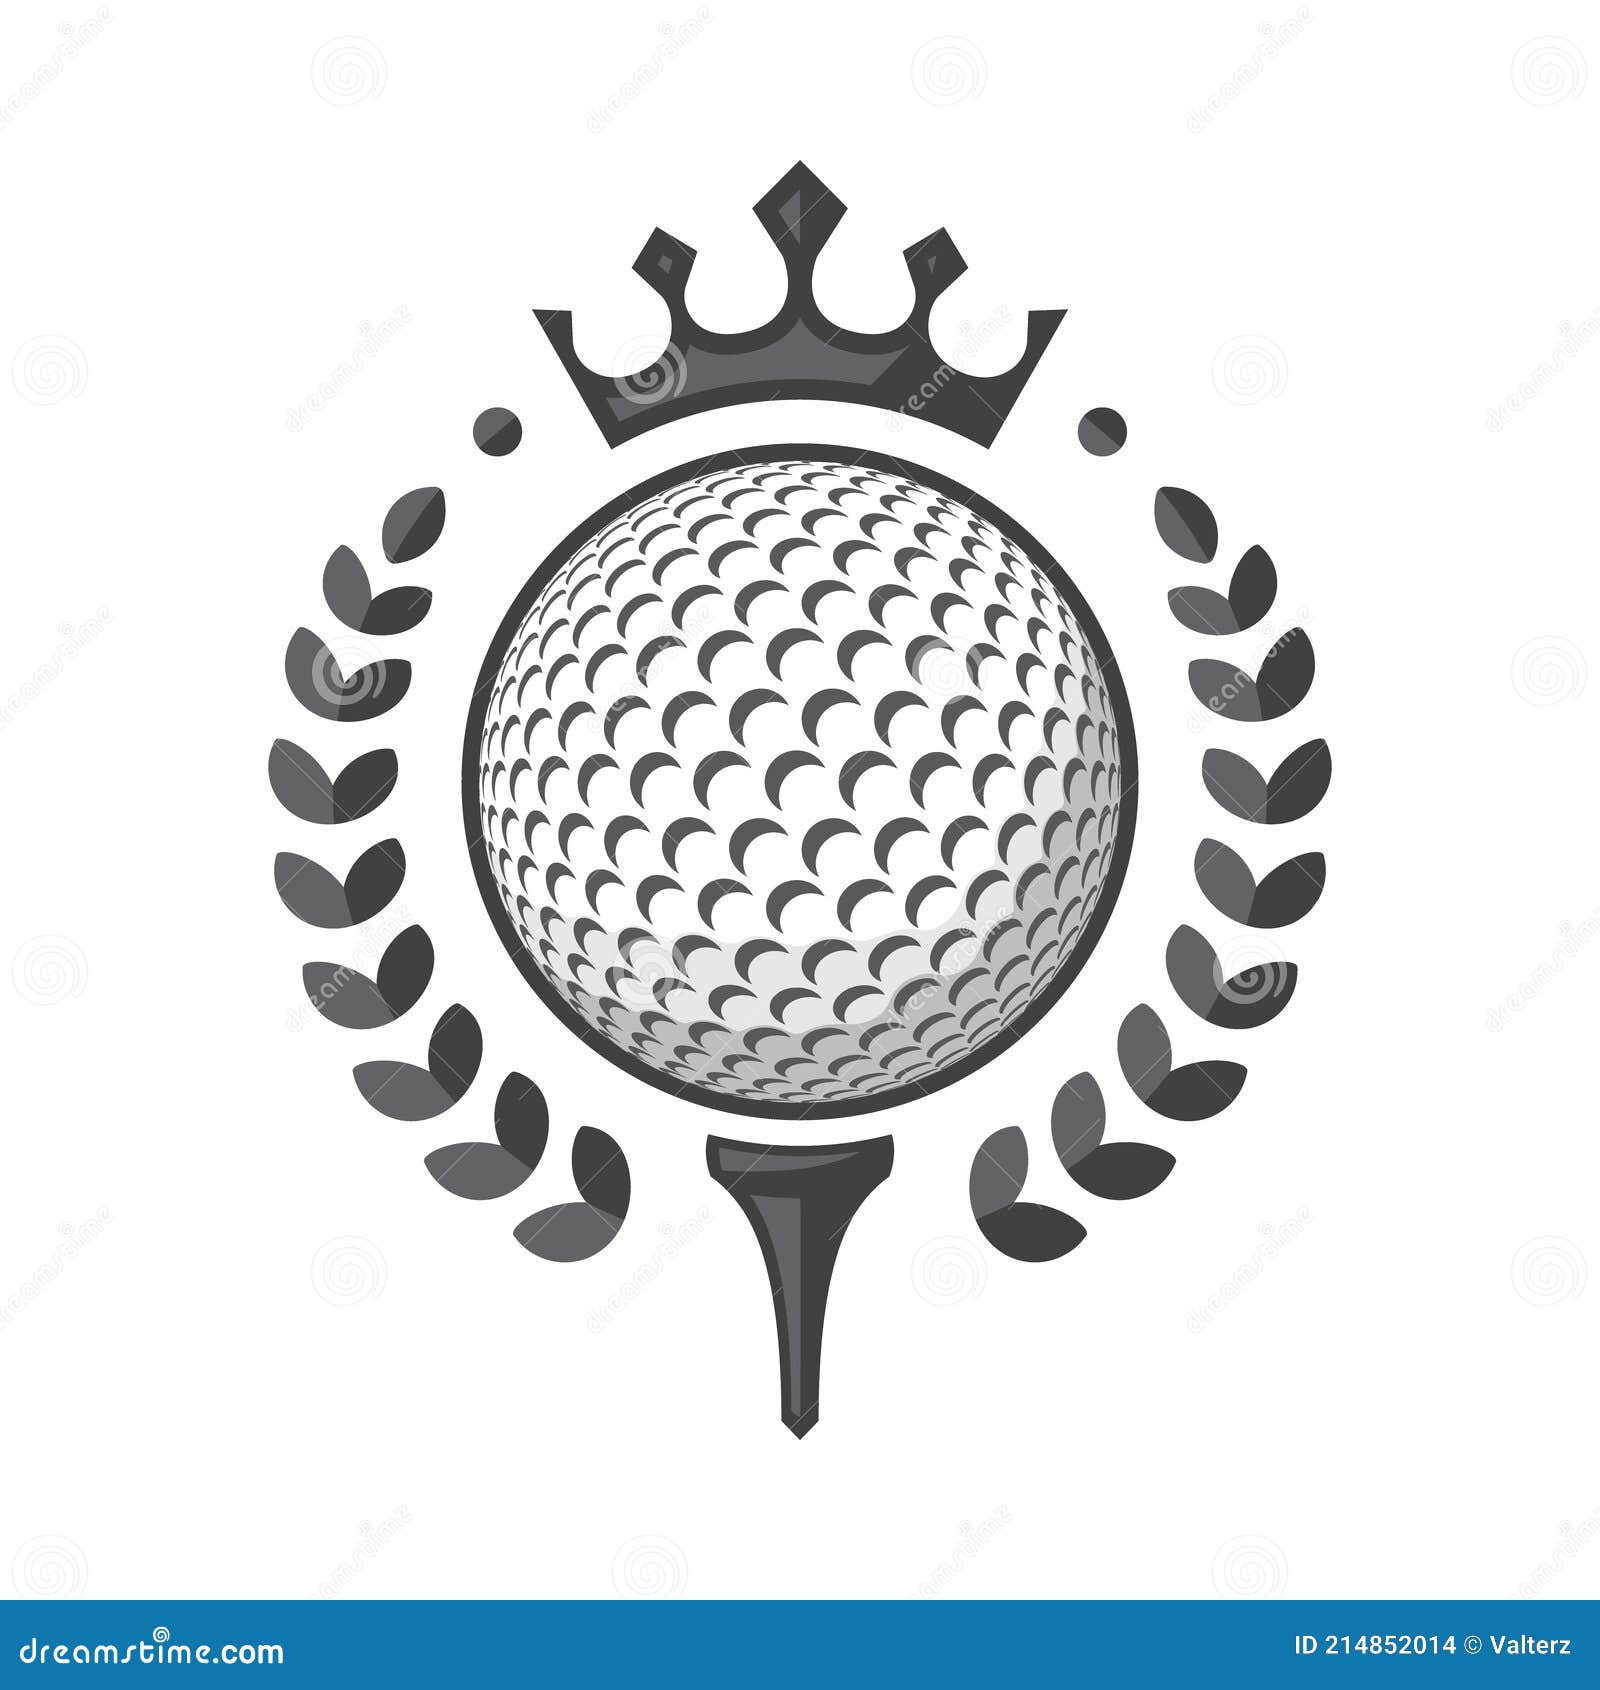 golf club logo. golf ball on tee with wreath and crown.  